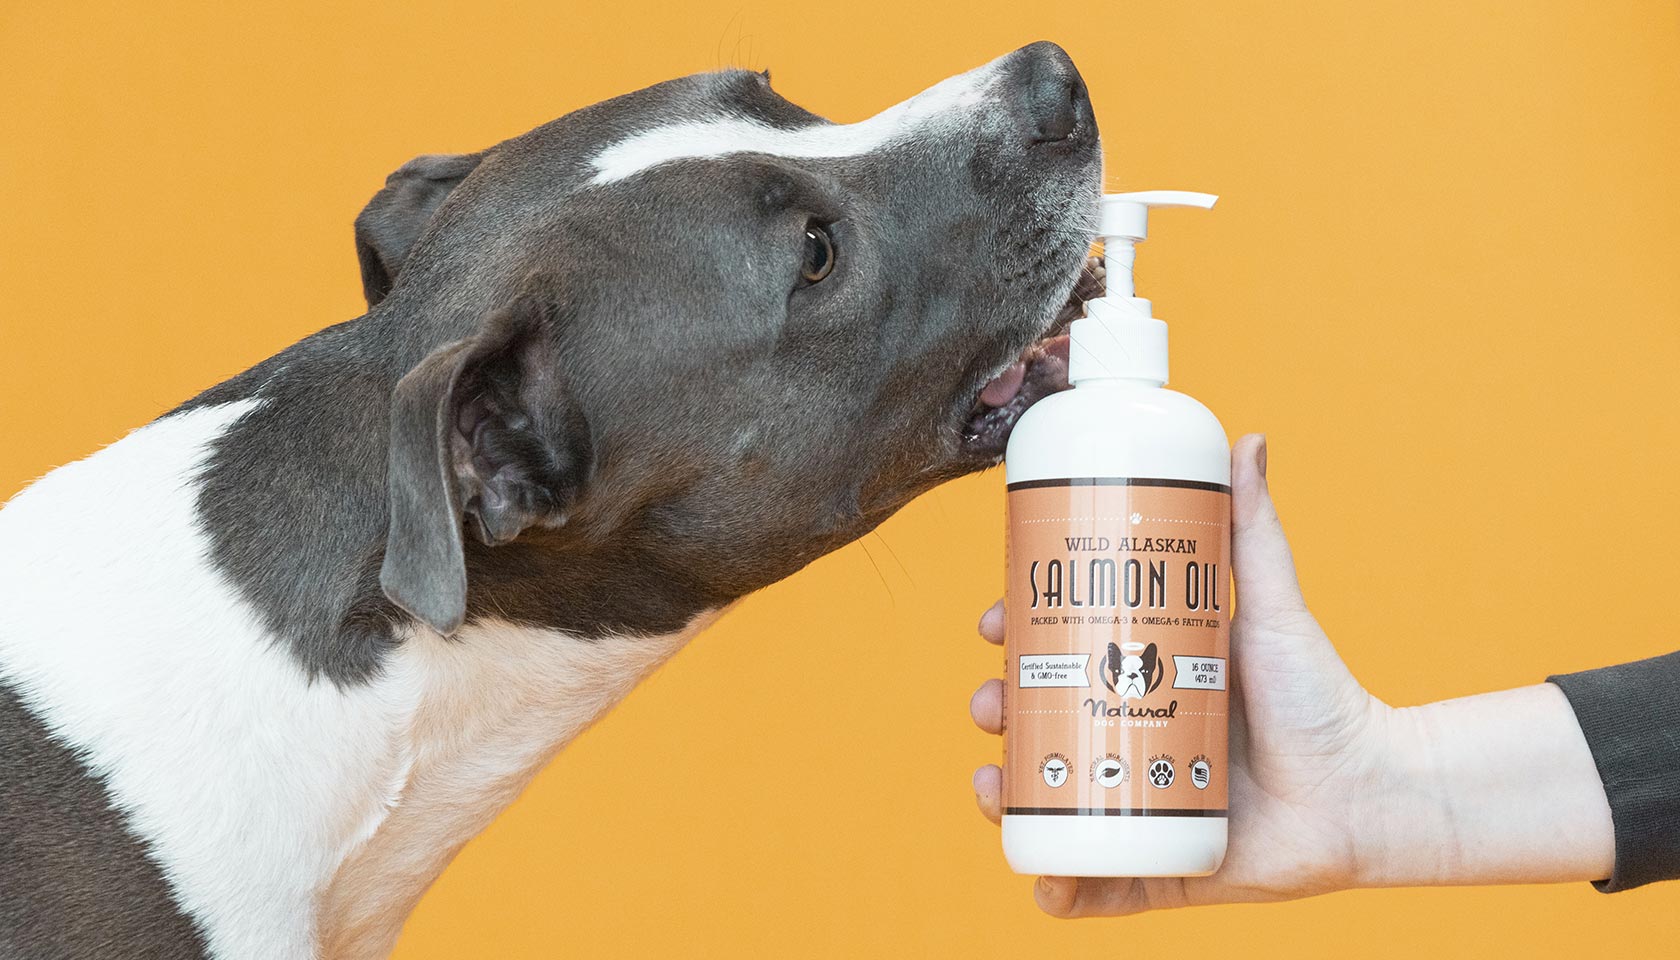 pitbull skin rash treatment